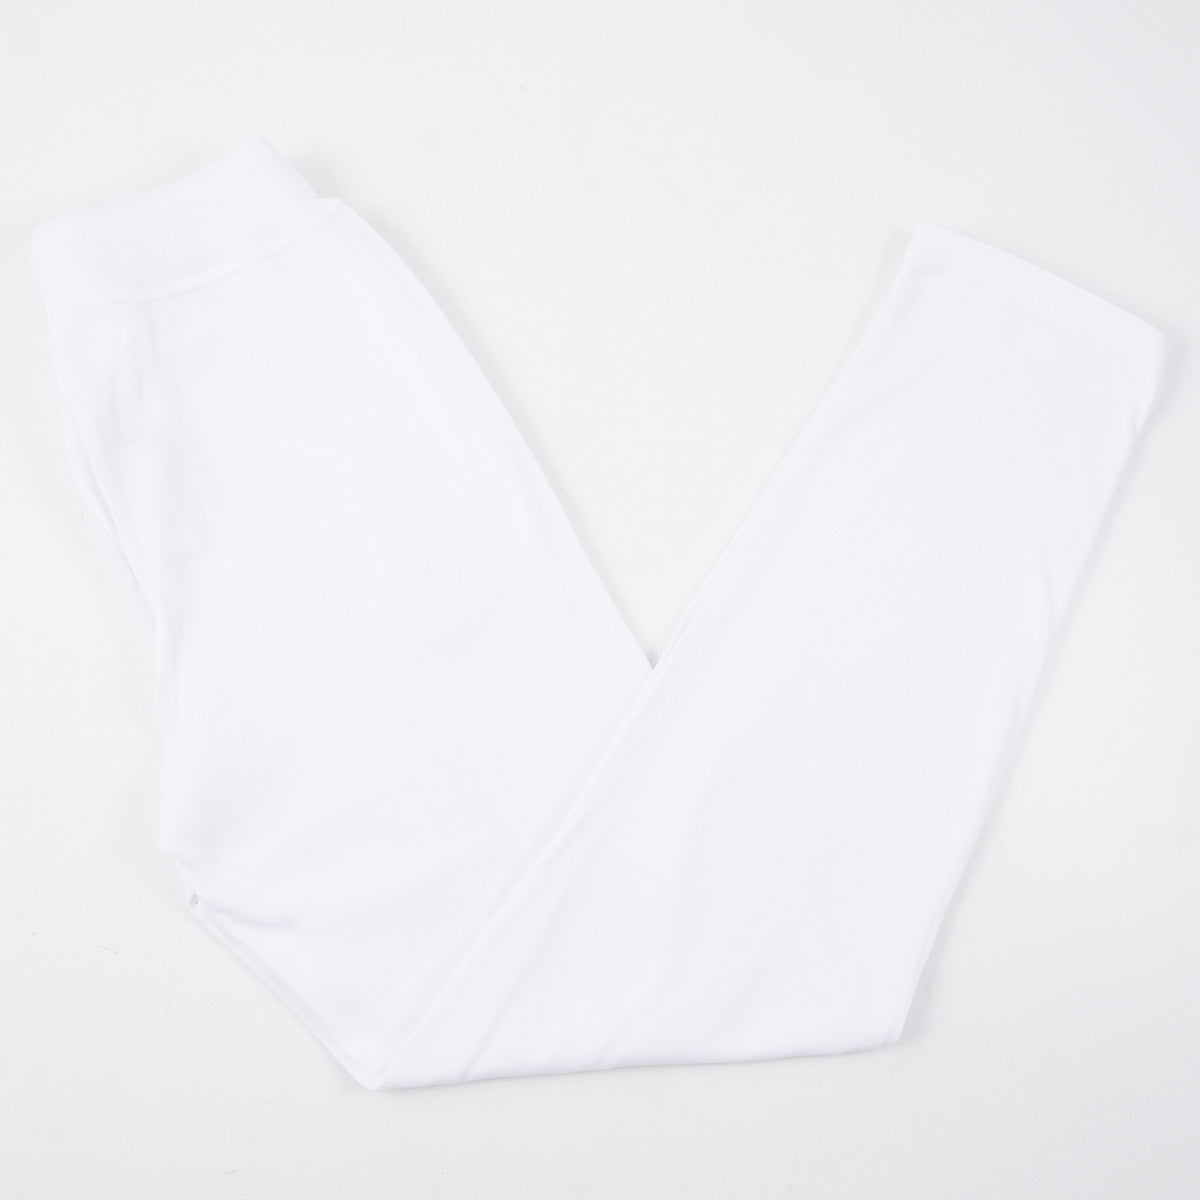 Kiton Knit Cotton Jogger Pants - Top Shelf Apparel